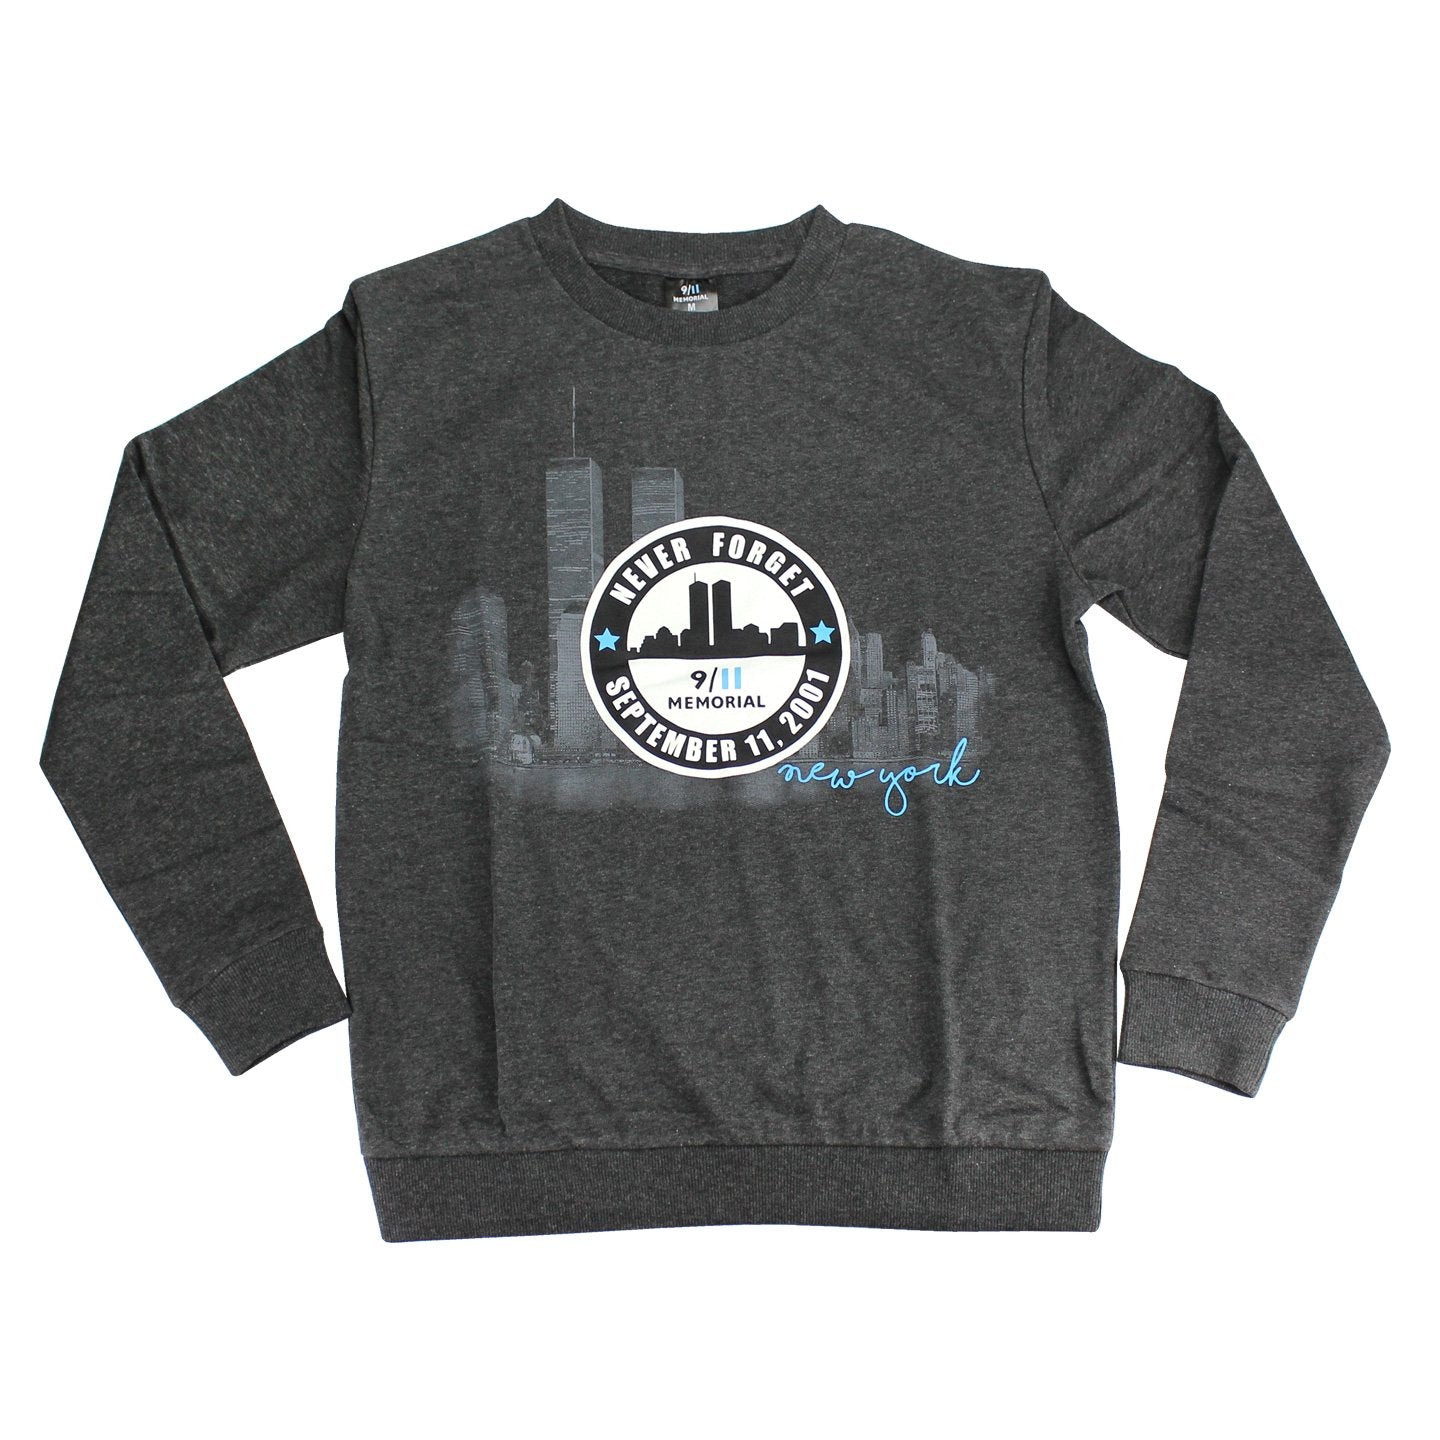 9/11 Memorial Crewneck Sweatshirt / Official Licensed Product